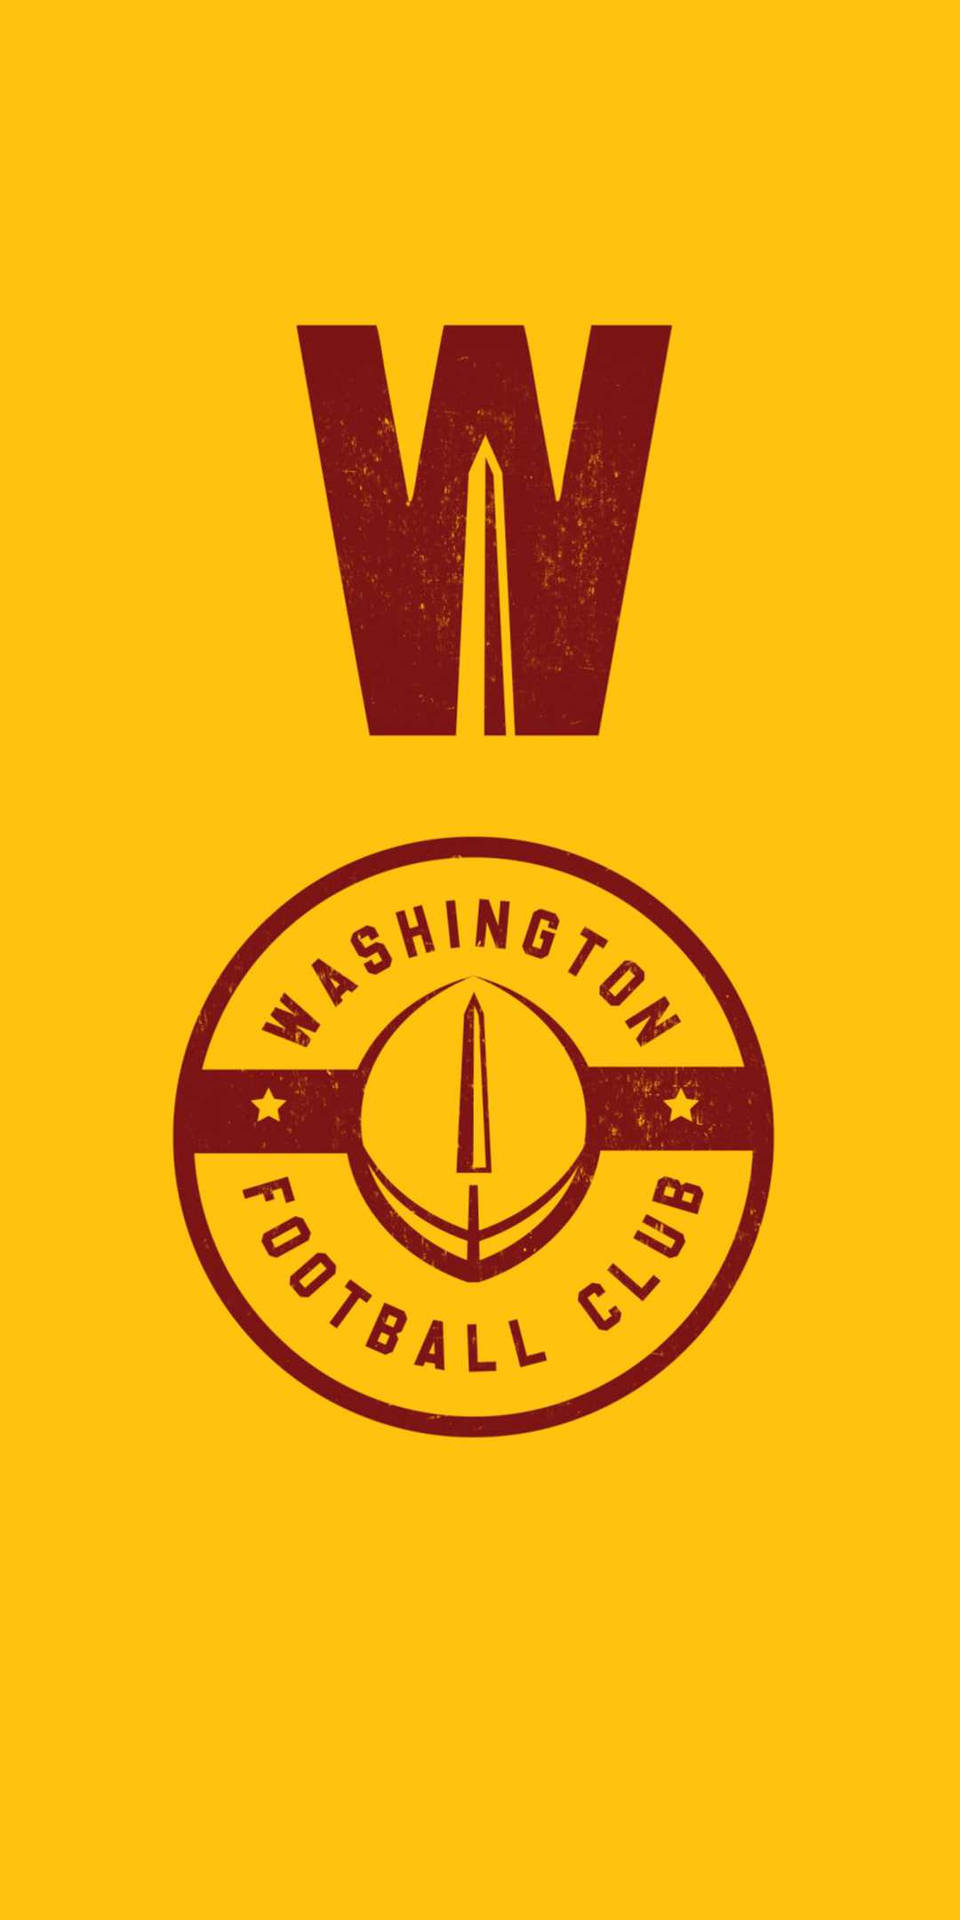 Washington Commanders Football Club Background